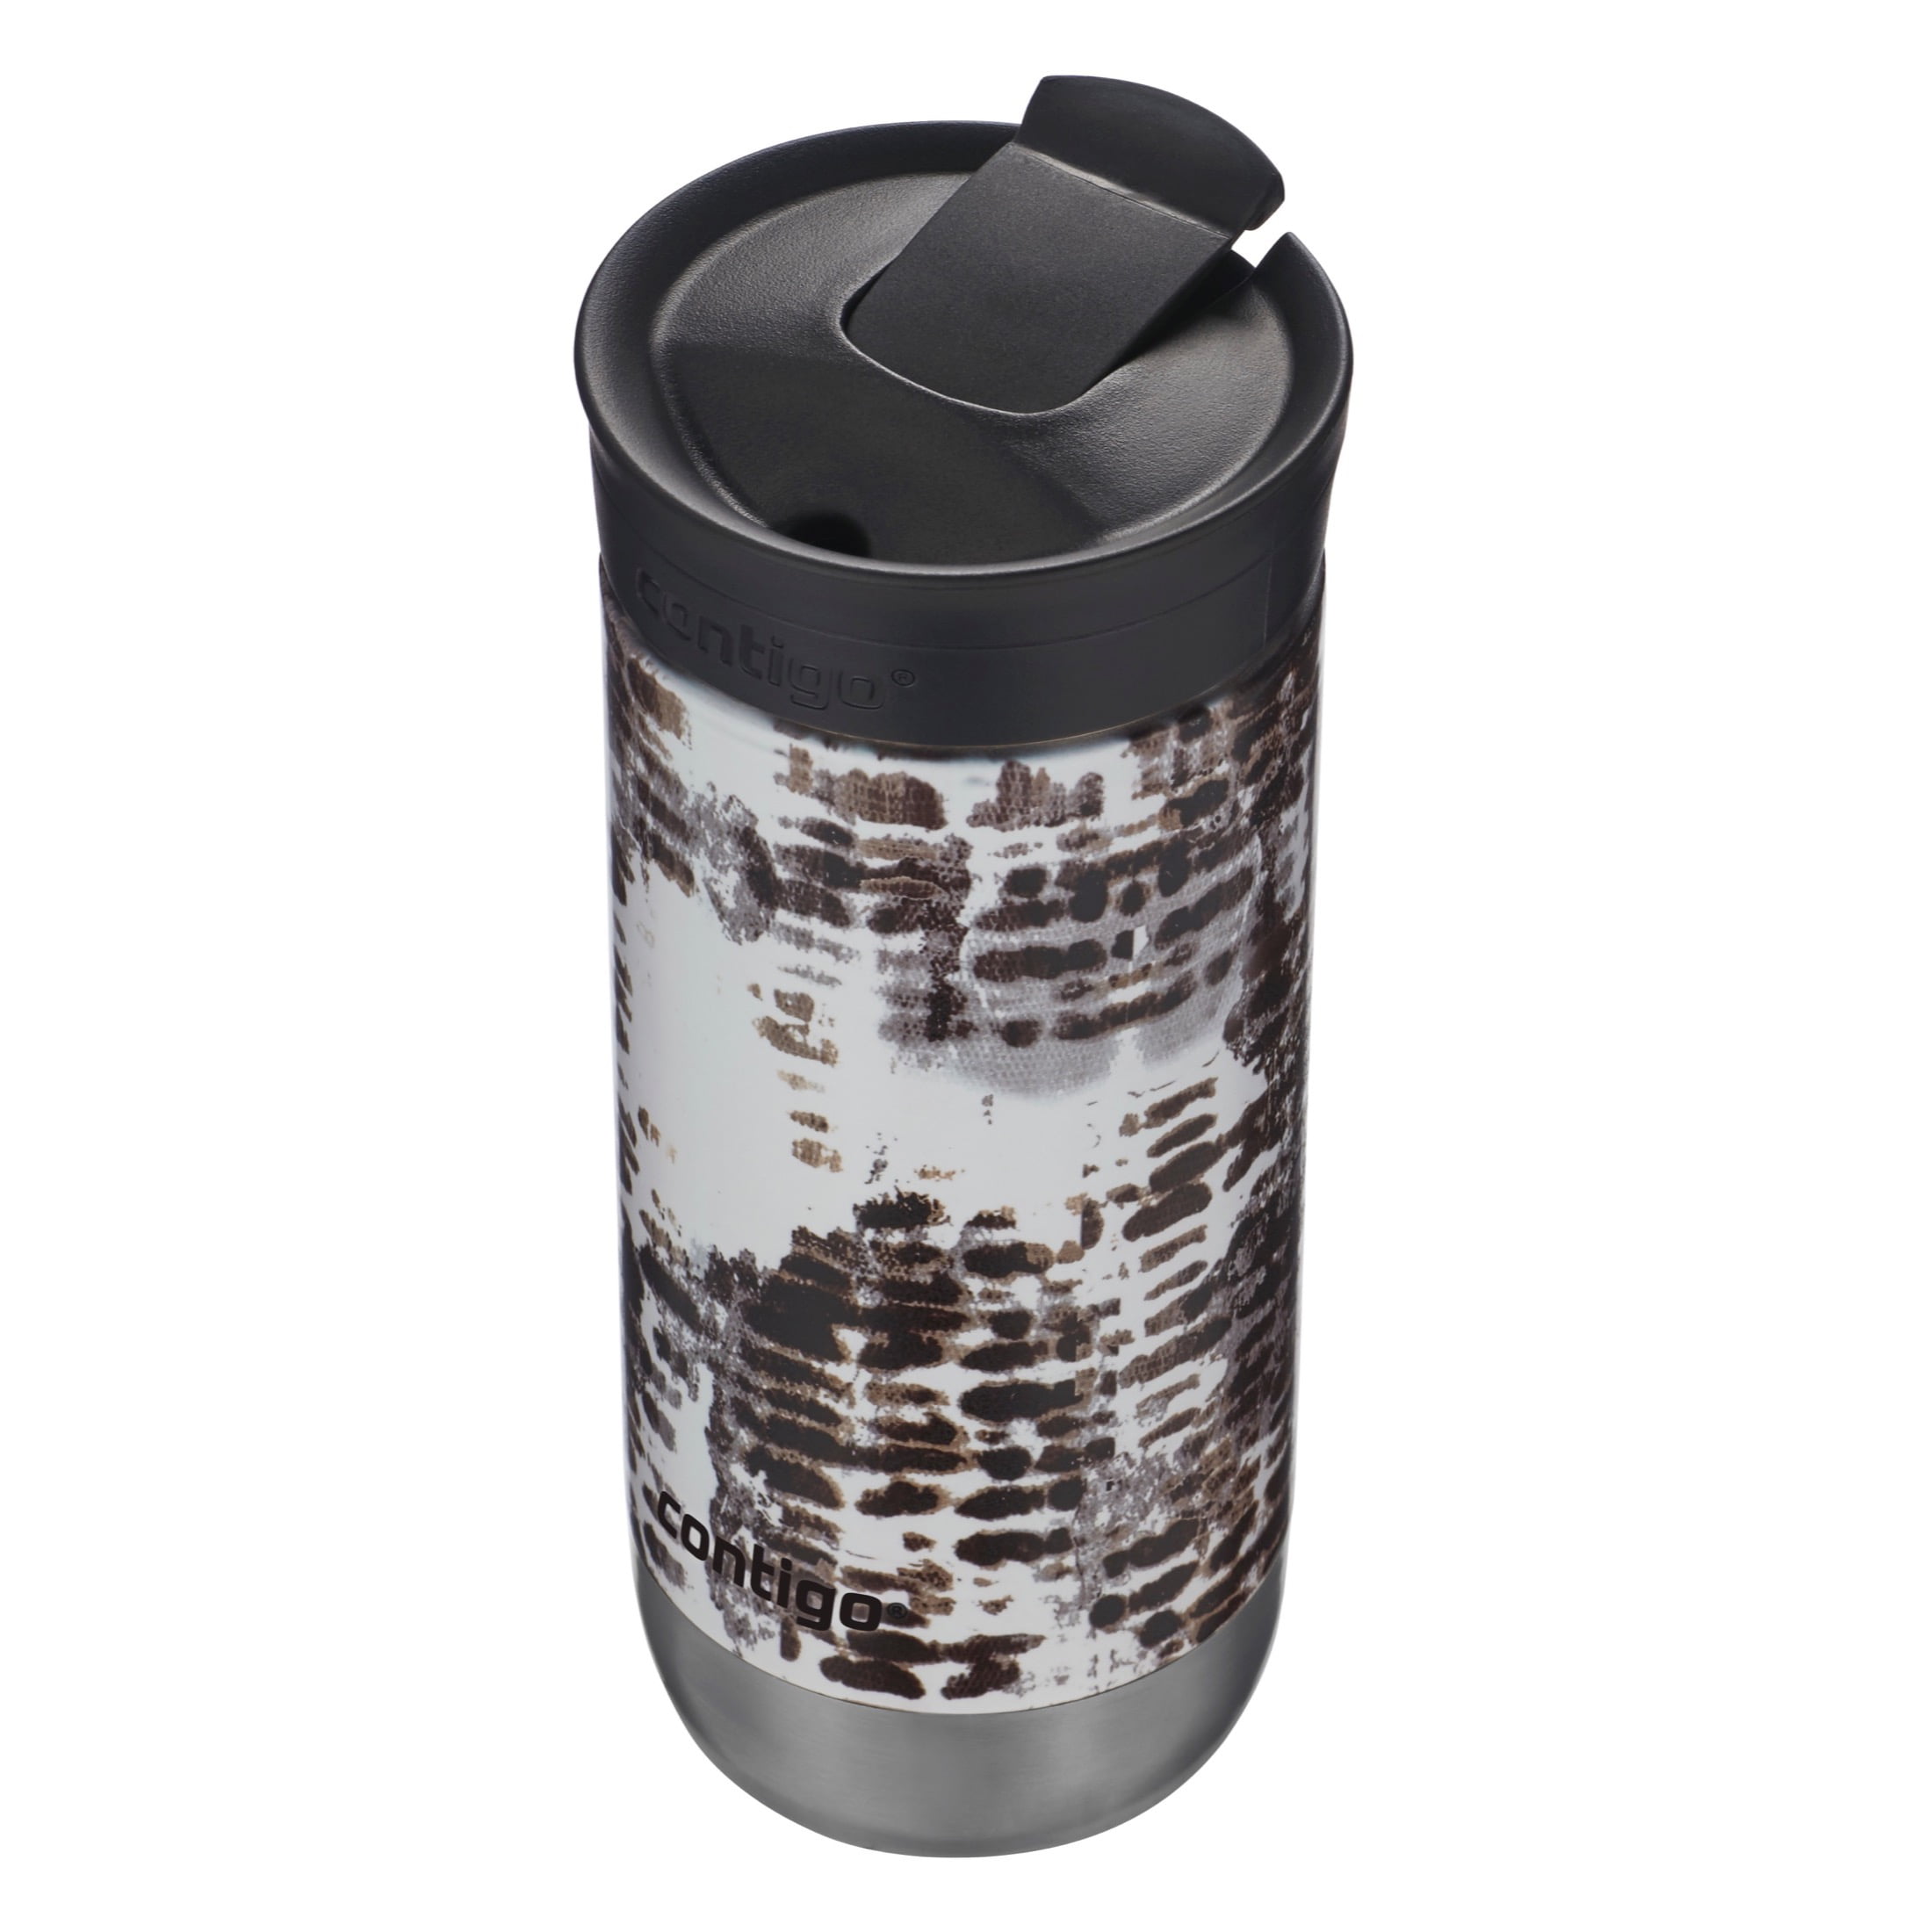 Contigo Stainless Steel Coffee Mug Couture SNAPSEAL Vacuum-Insulated Travel  Mug, 16 Oz., Polished Concrete 